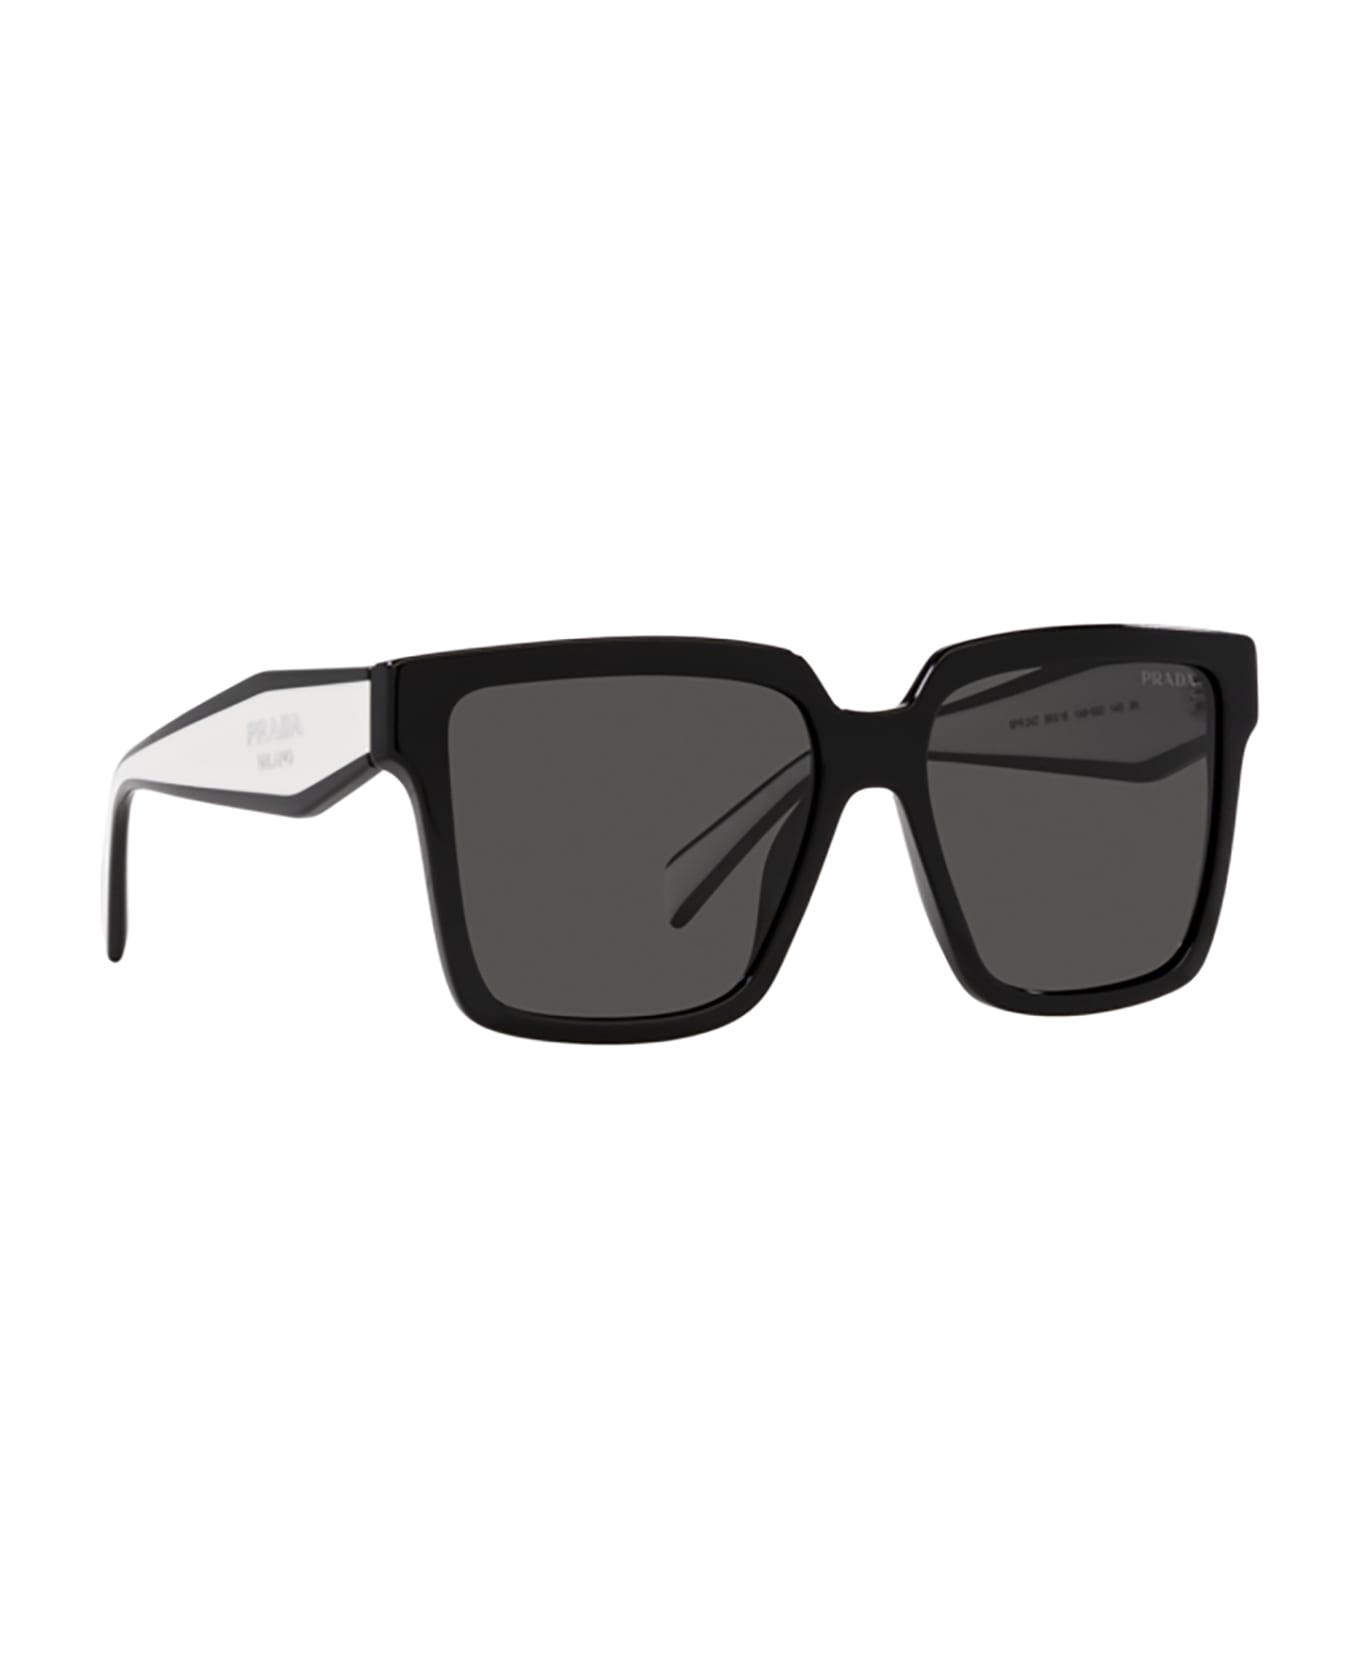 Prada Eyewear Pr 24zs Black Sunglasses - Black